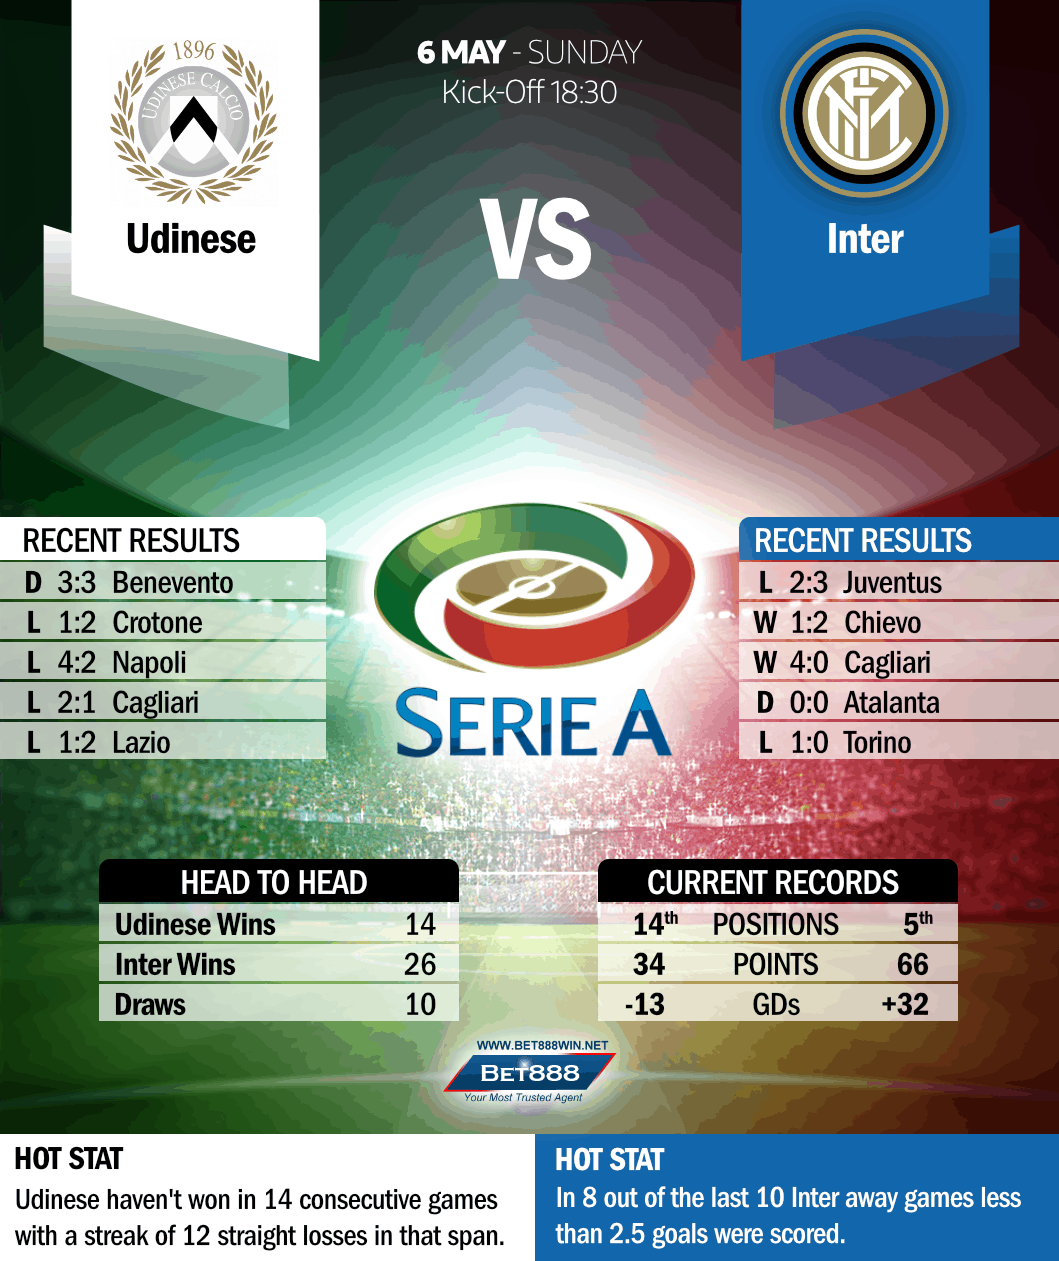 Udinese vs Inter 06/05/18